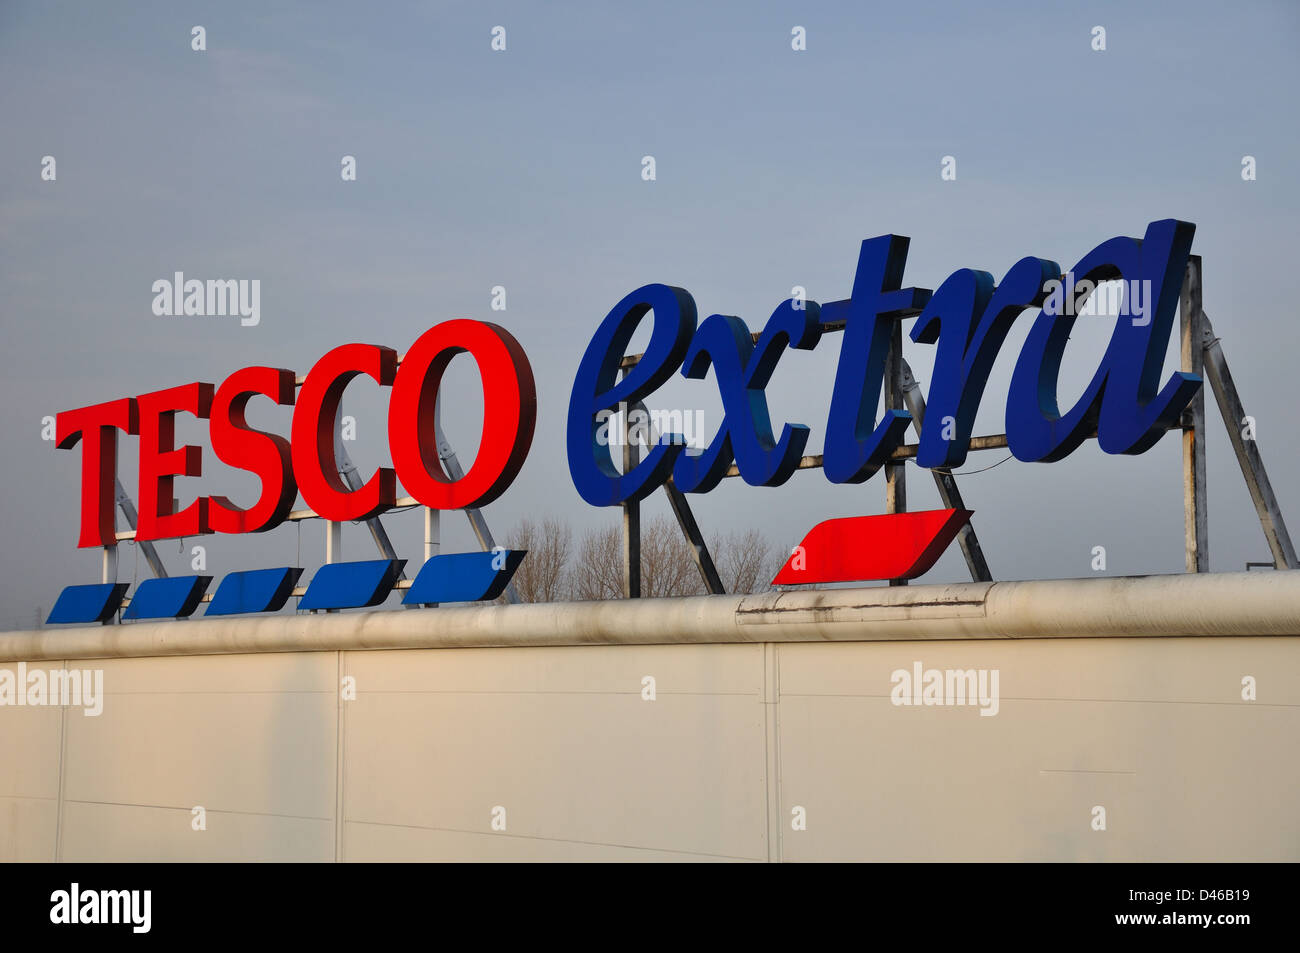 Tesco signs against a blue sky Stock Photo